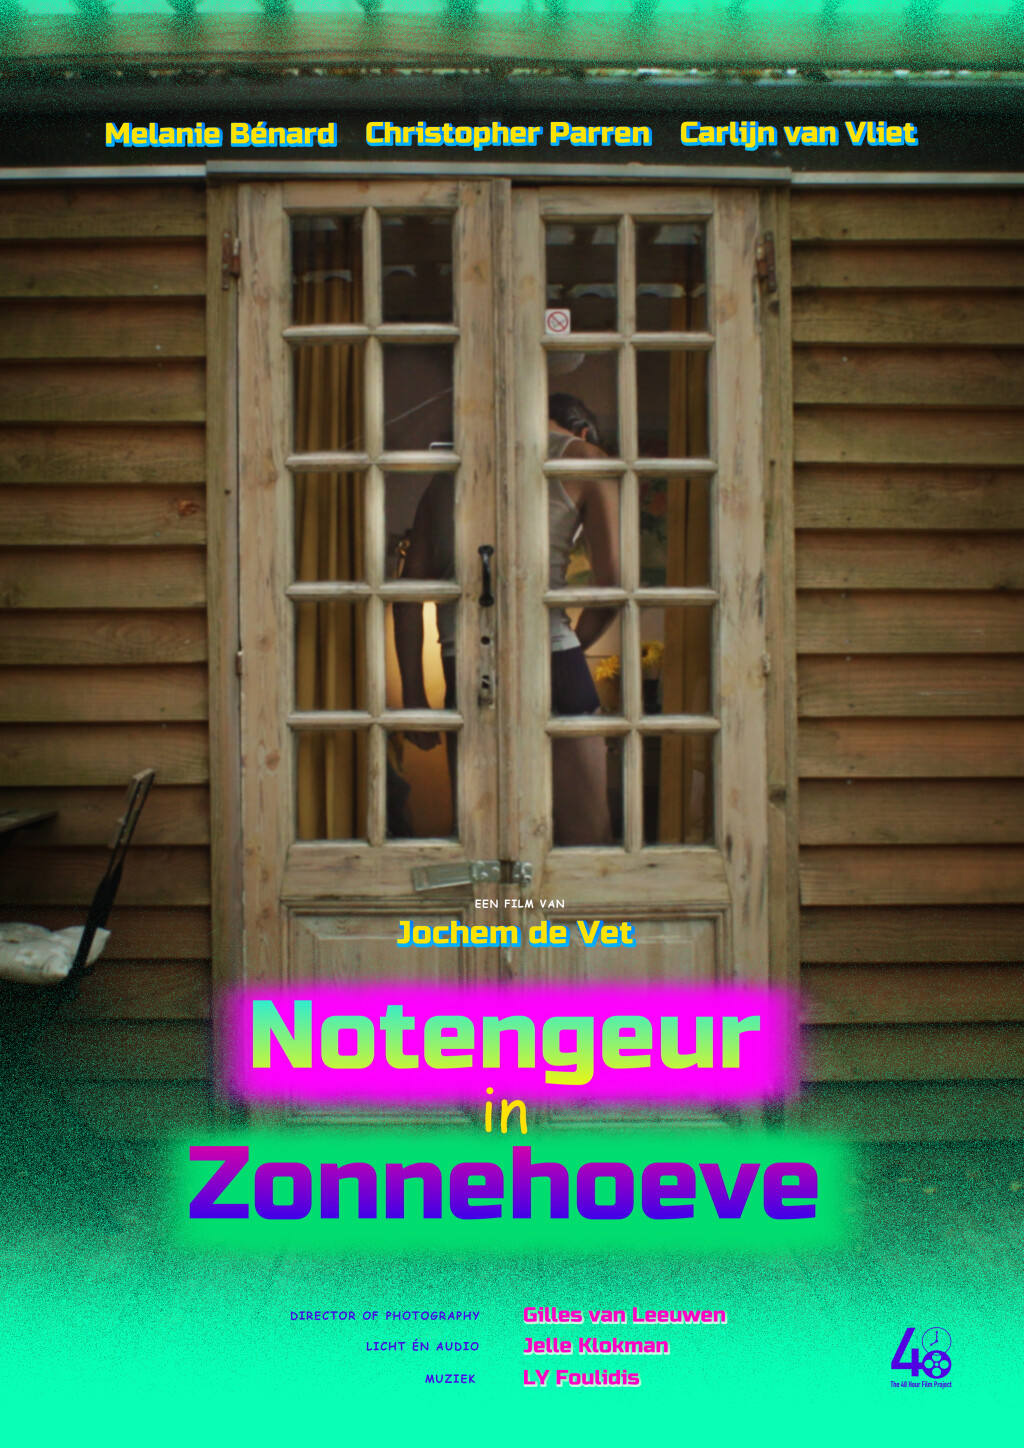 Filmposter for Notengeur in Zonnehoeve